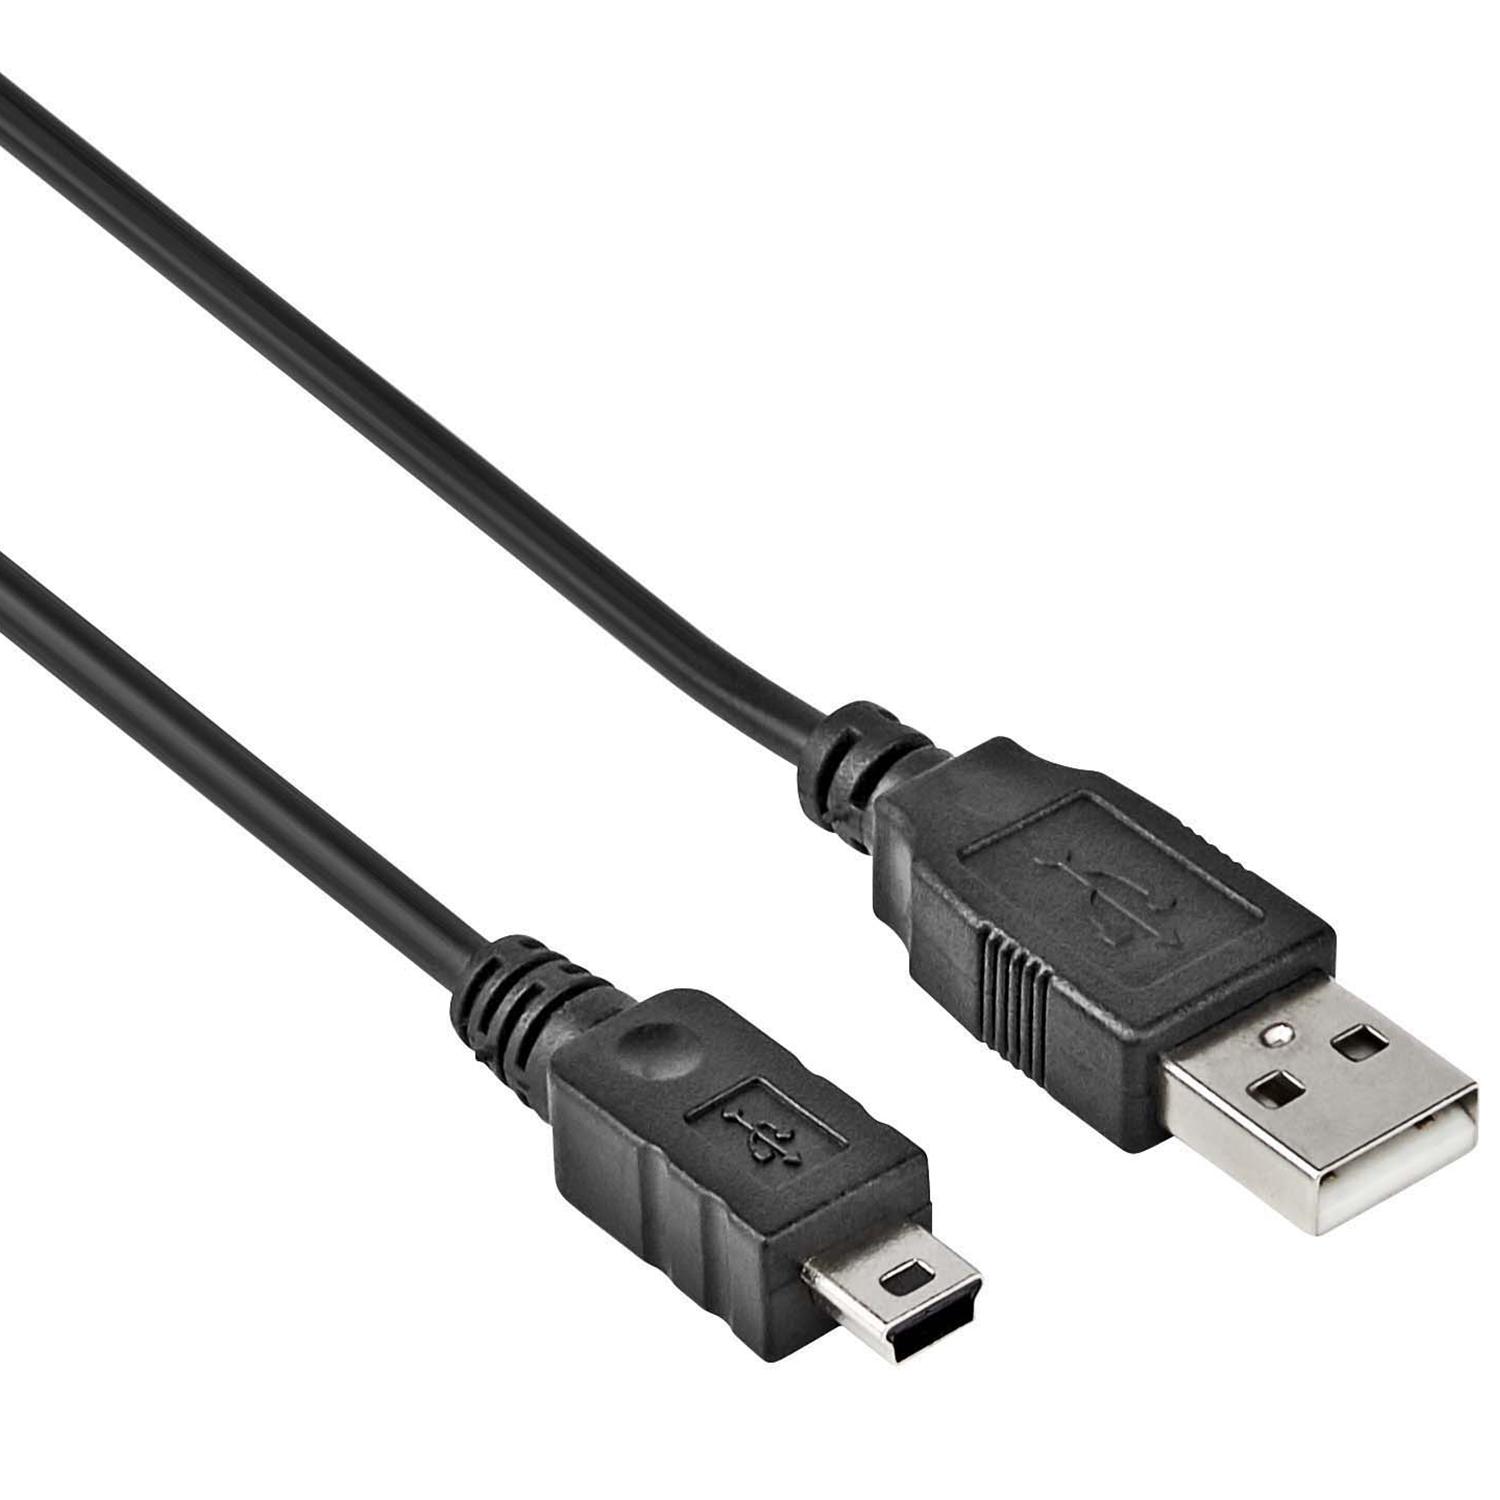 USB 2.0 Mini Kabel - Allteq